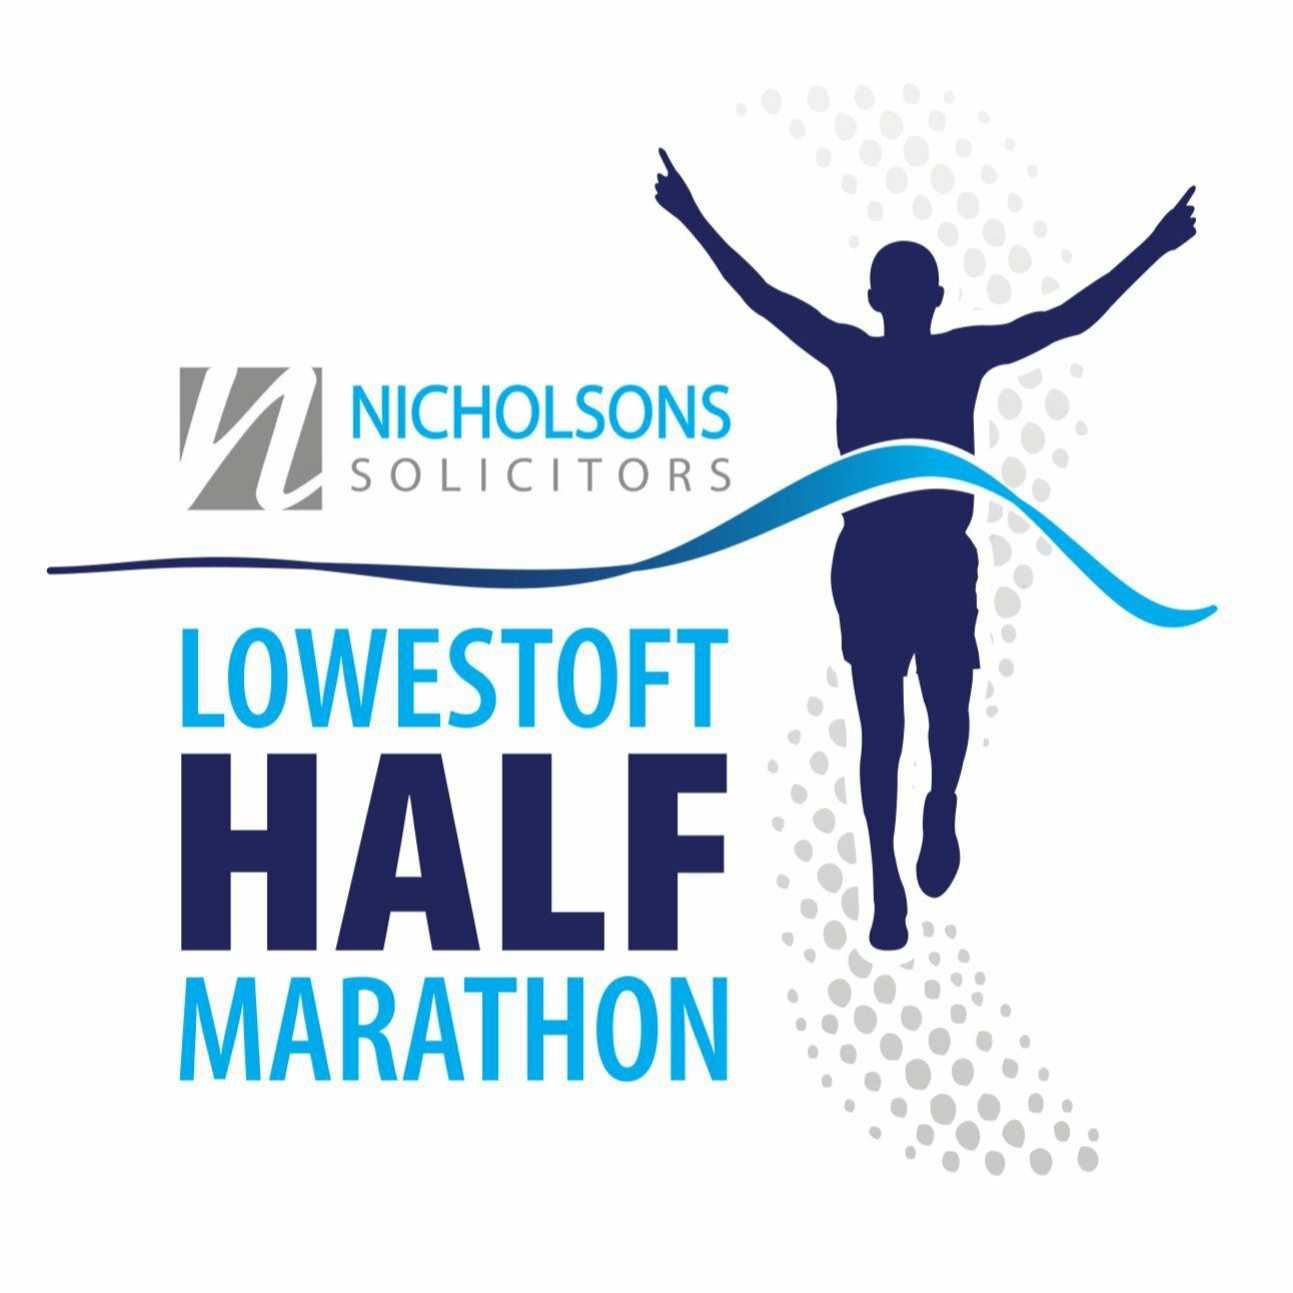 Nicholsons Solicitors Lowestoft Half Marathon Image